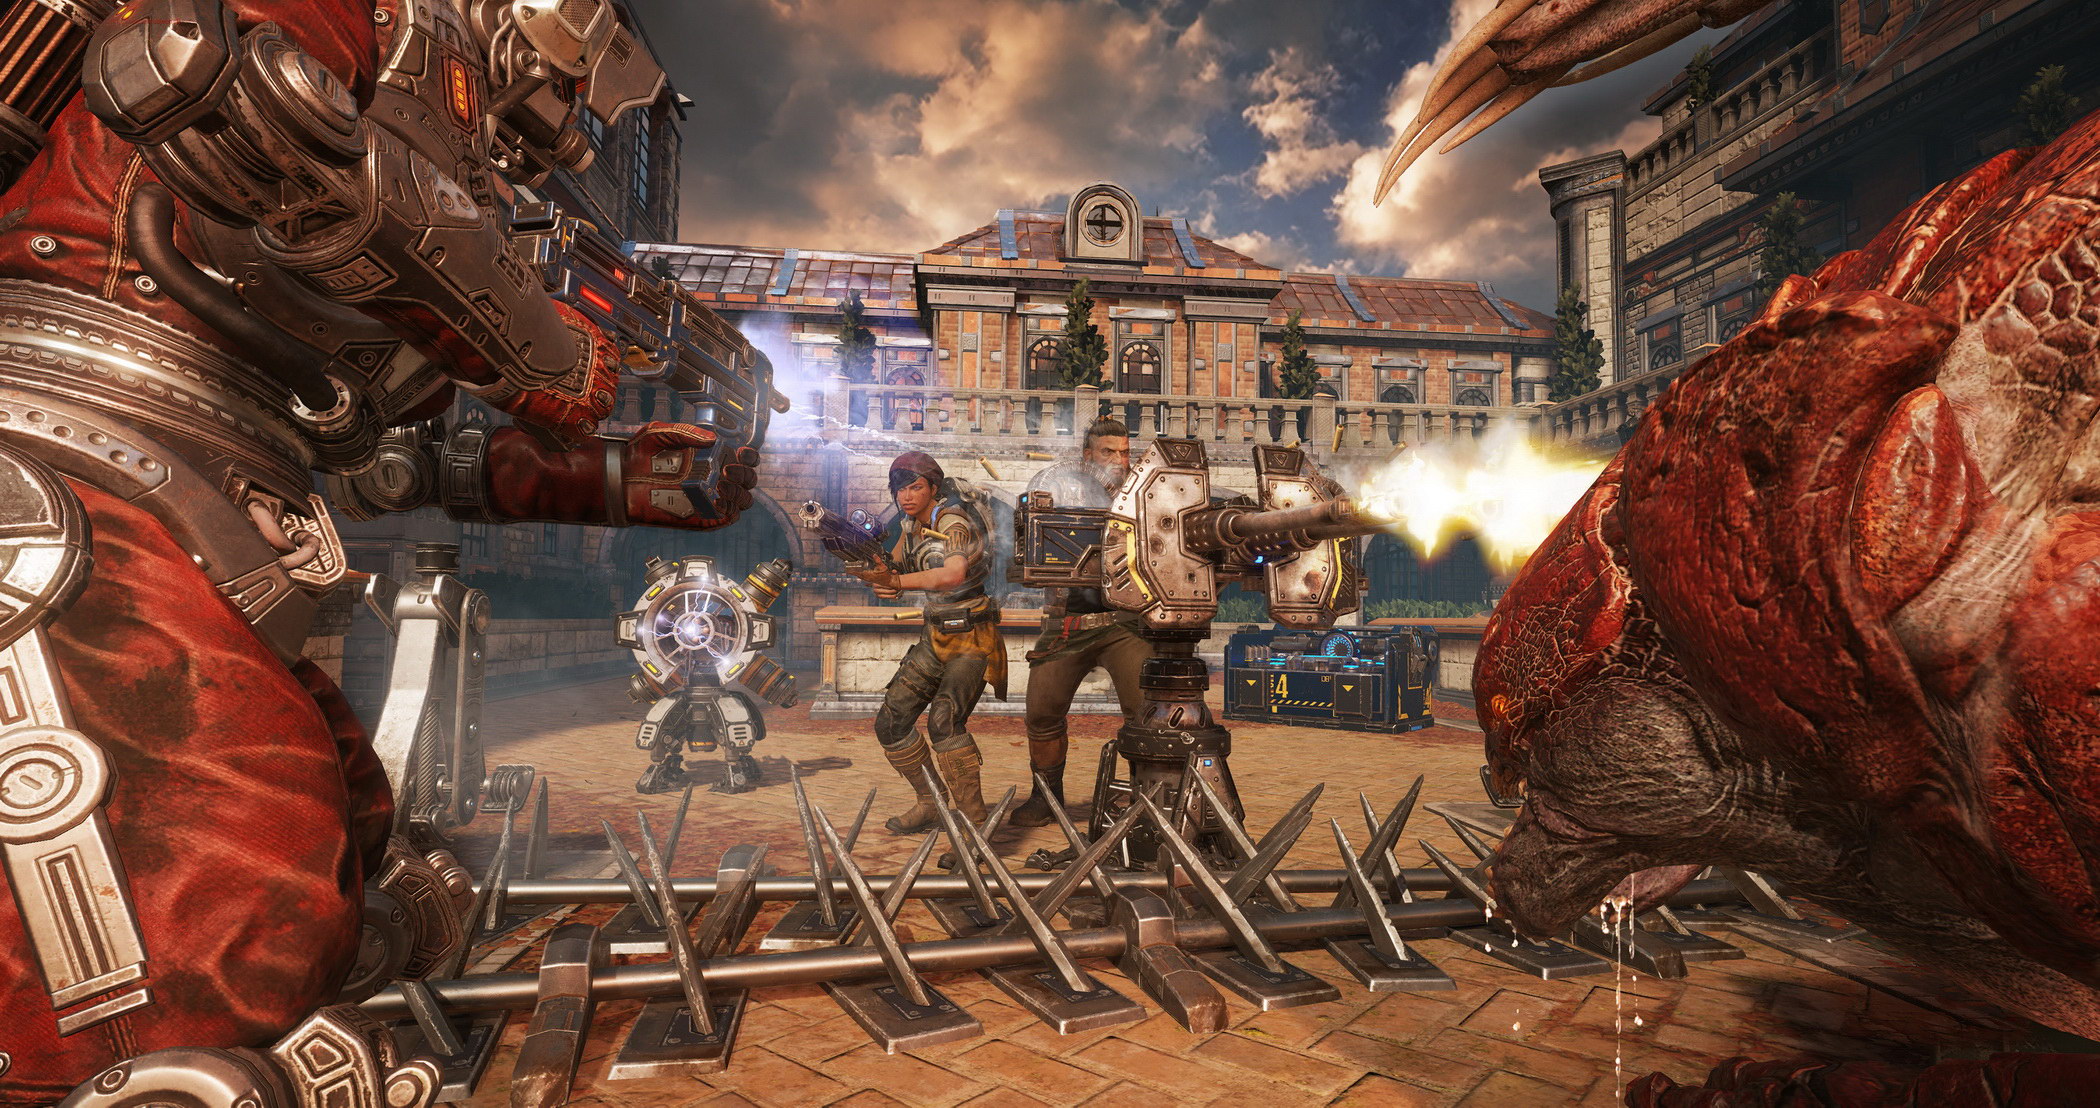 Análise Arkade: Gears of War 4 renova a guerra com muita competência -  Arkade